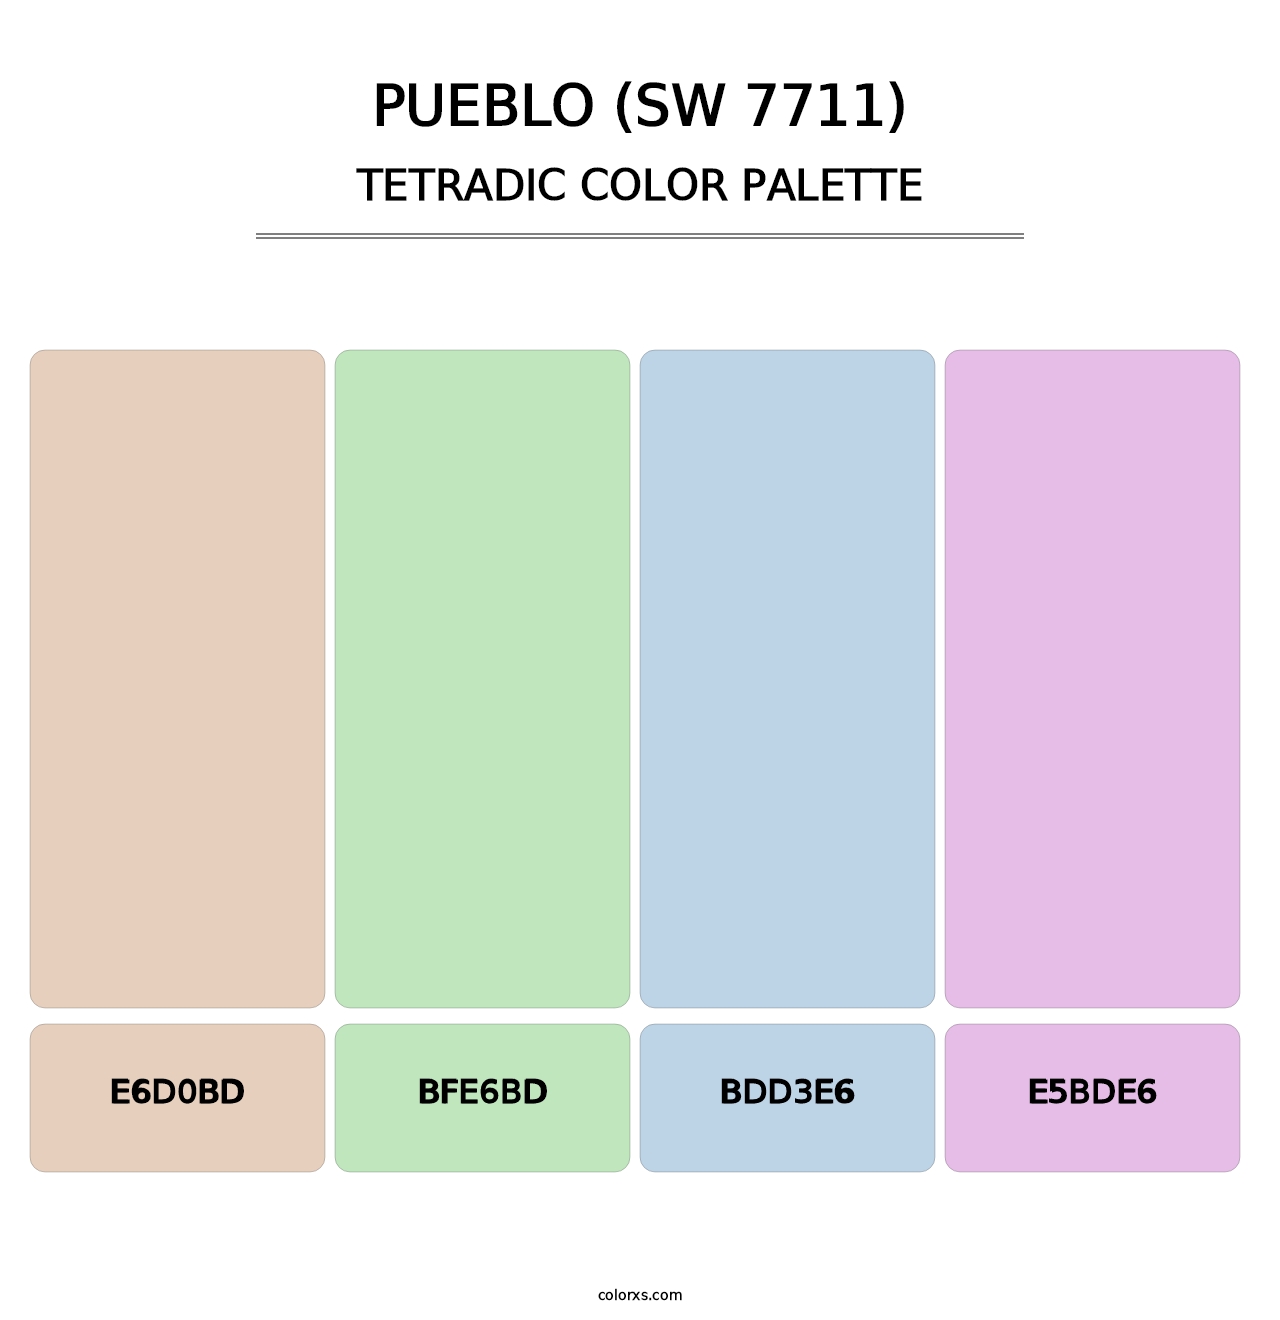 Pueblo (SW 7711) - Tetradic Color Palette